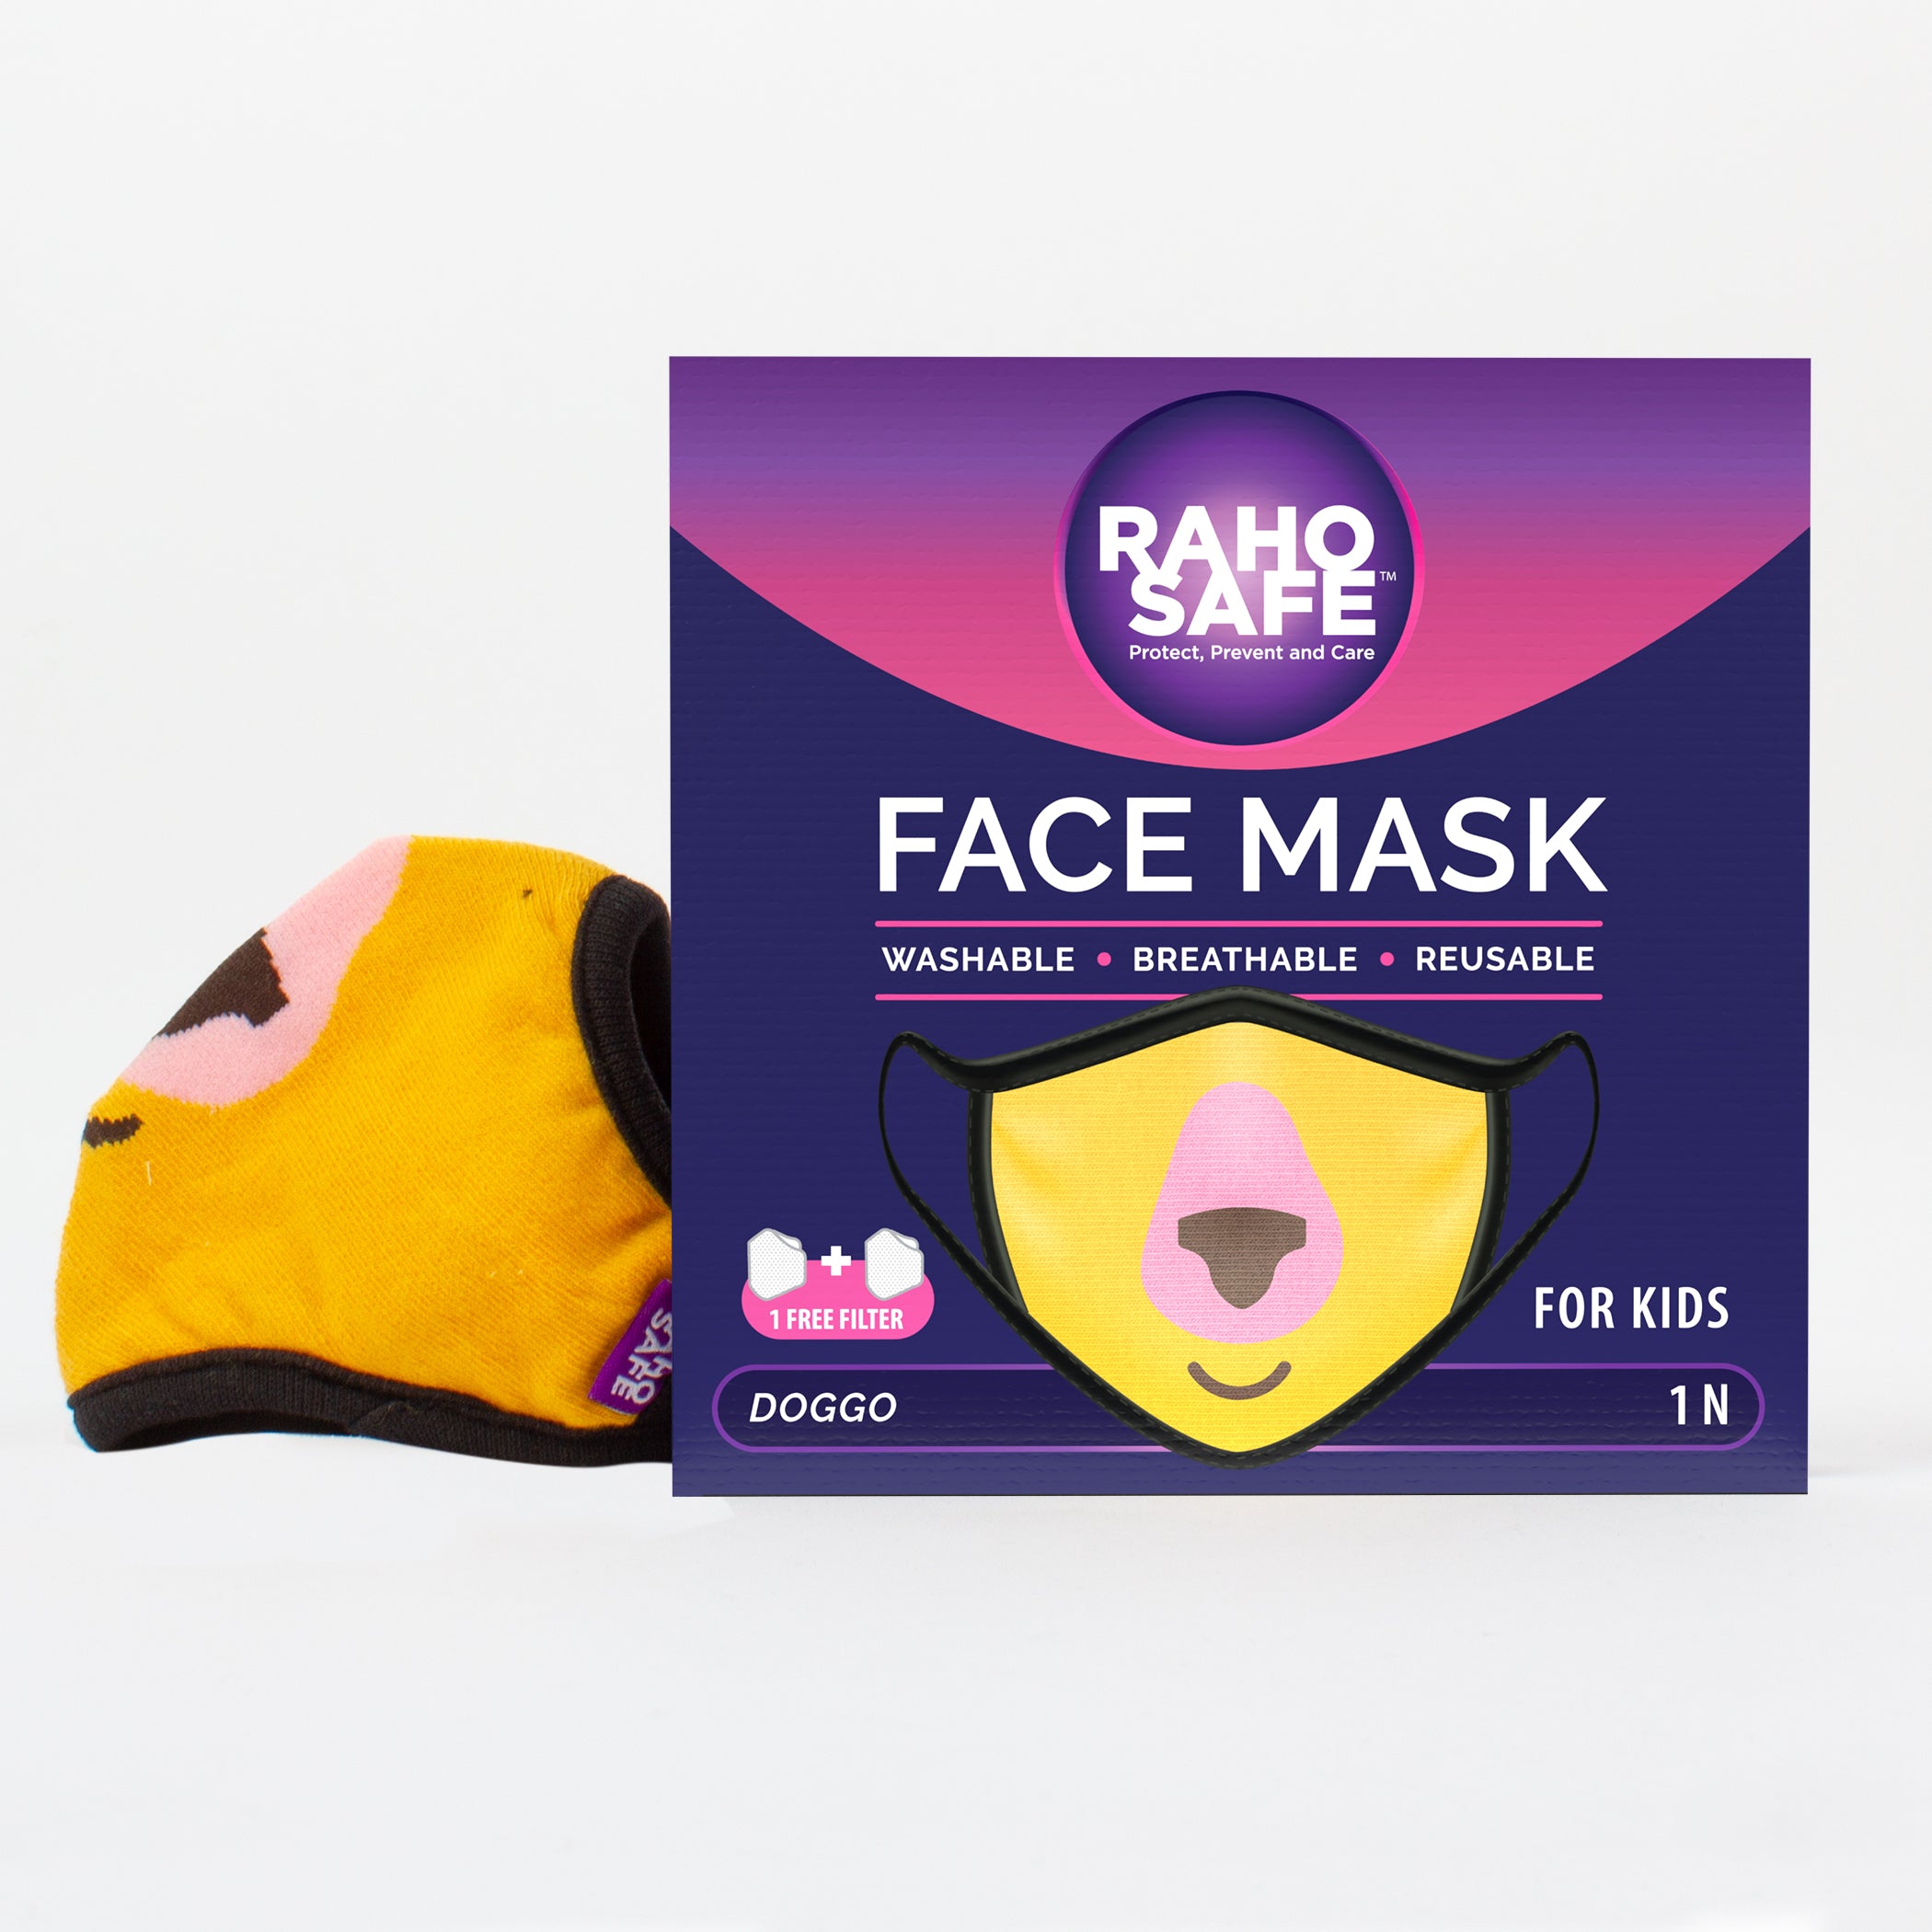 Doggo Face Mask for Kids